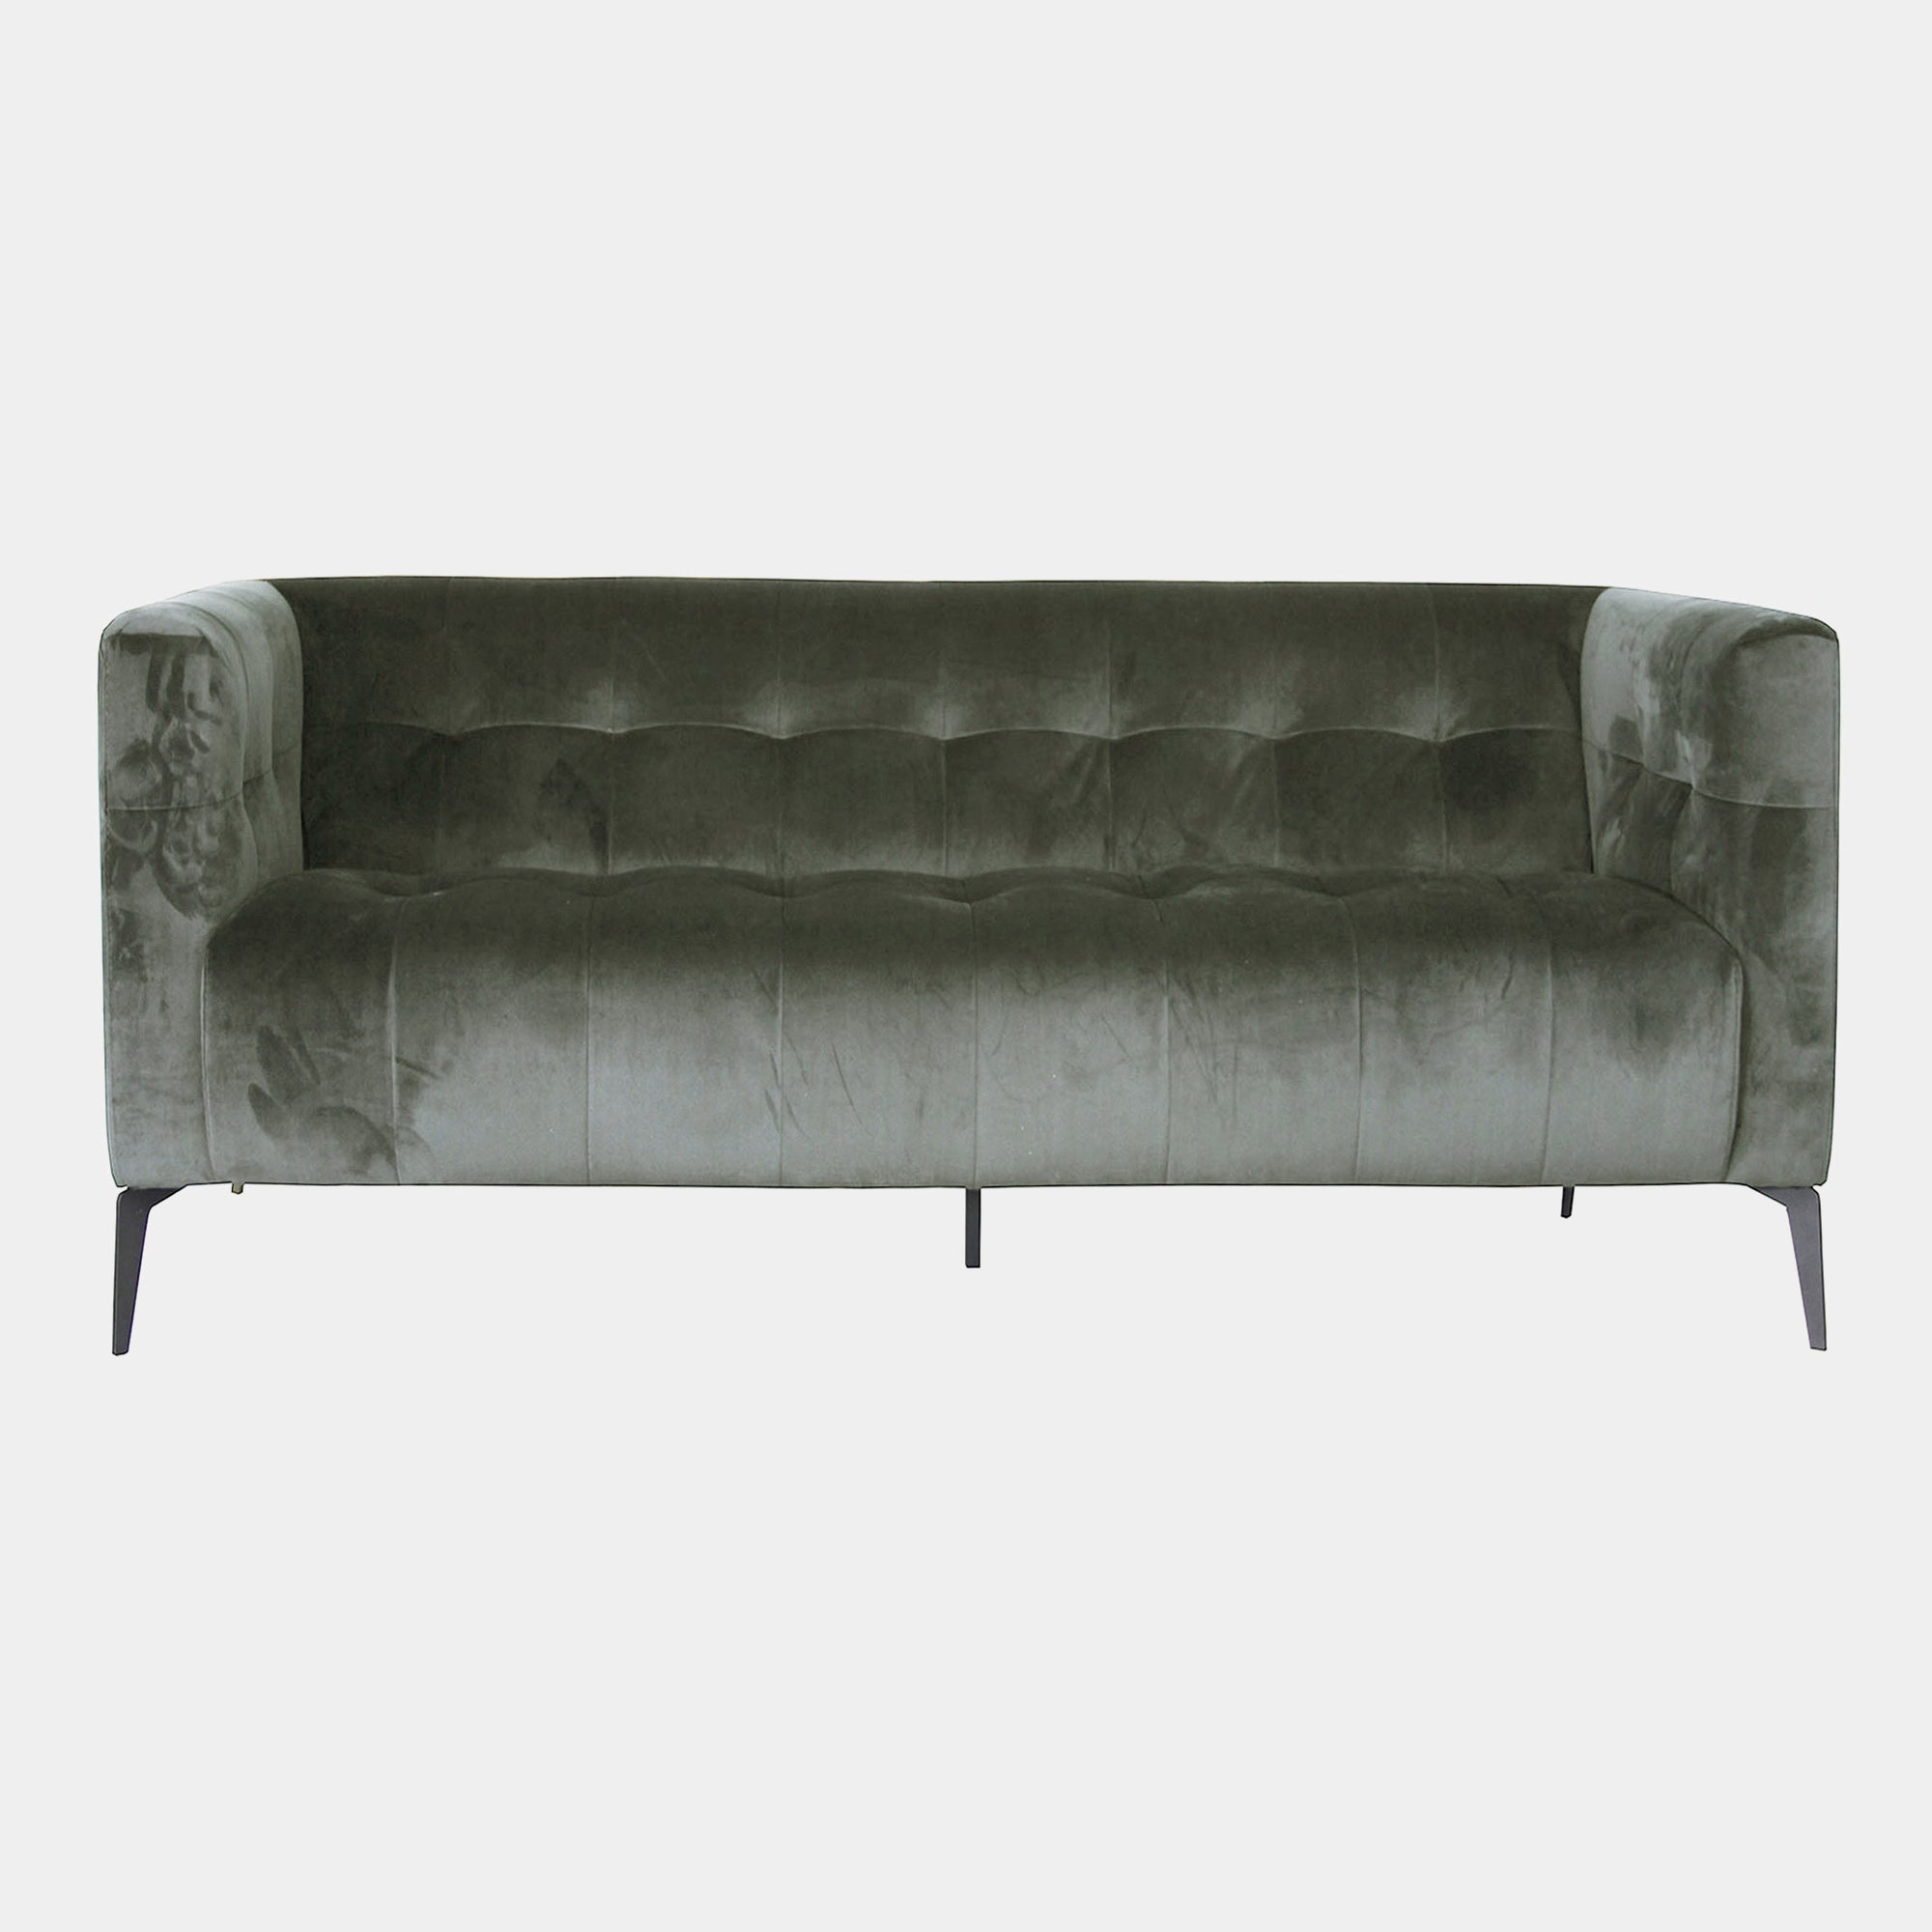 Maranello - 3 Seat Sofa In Fabric Or Leather Fabric Grade BSF20